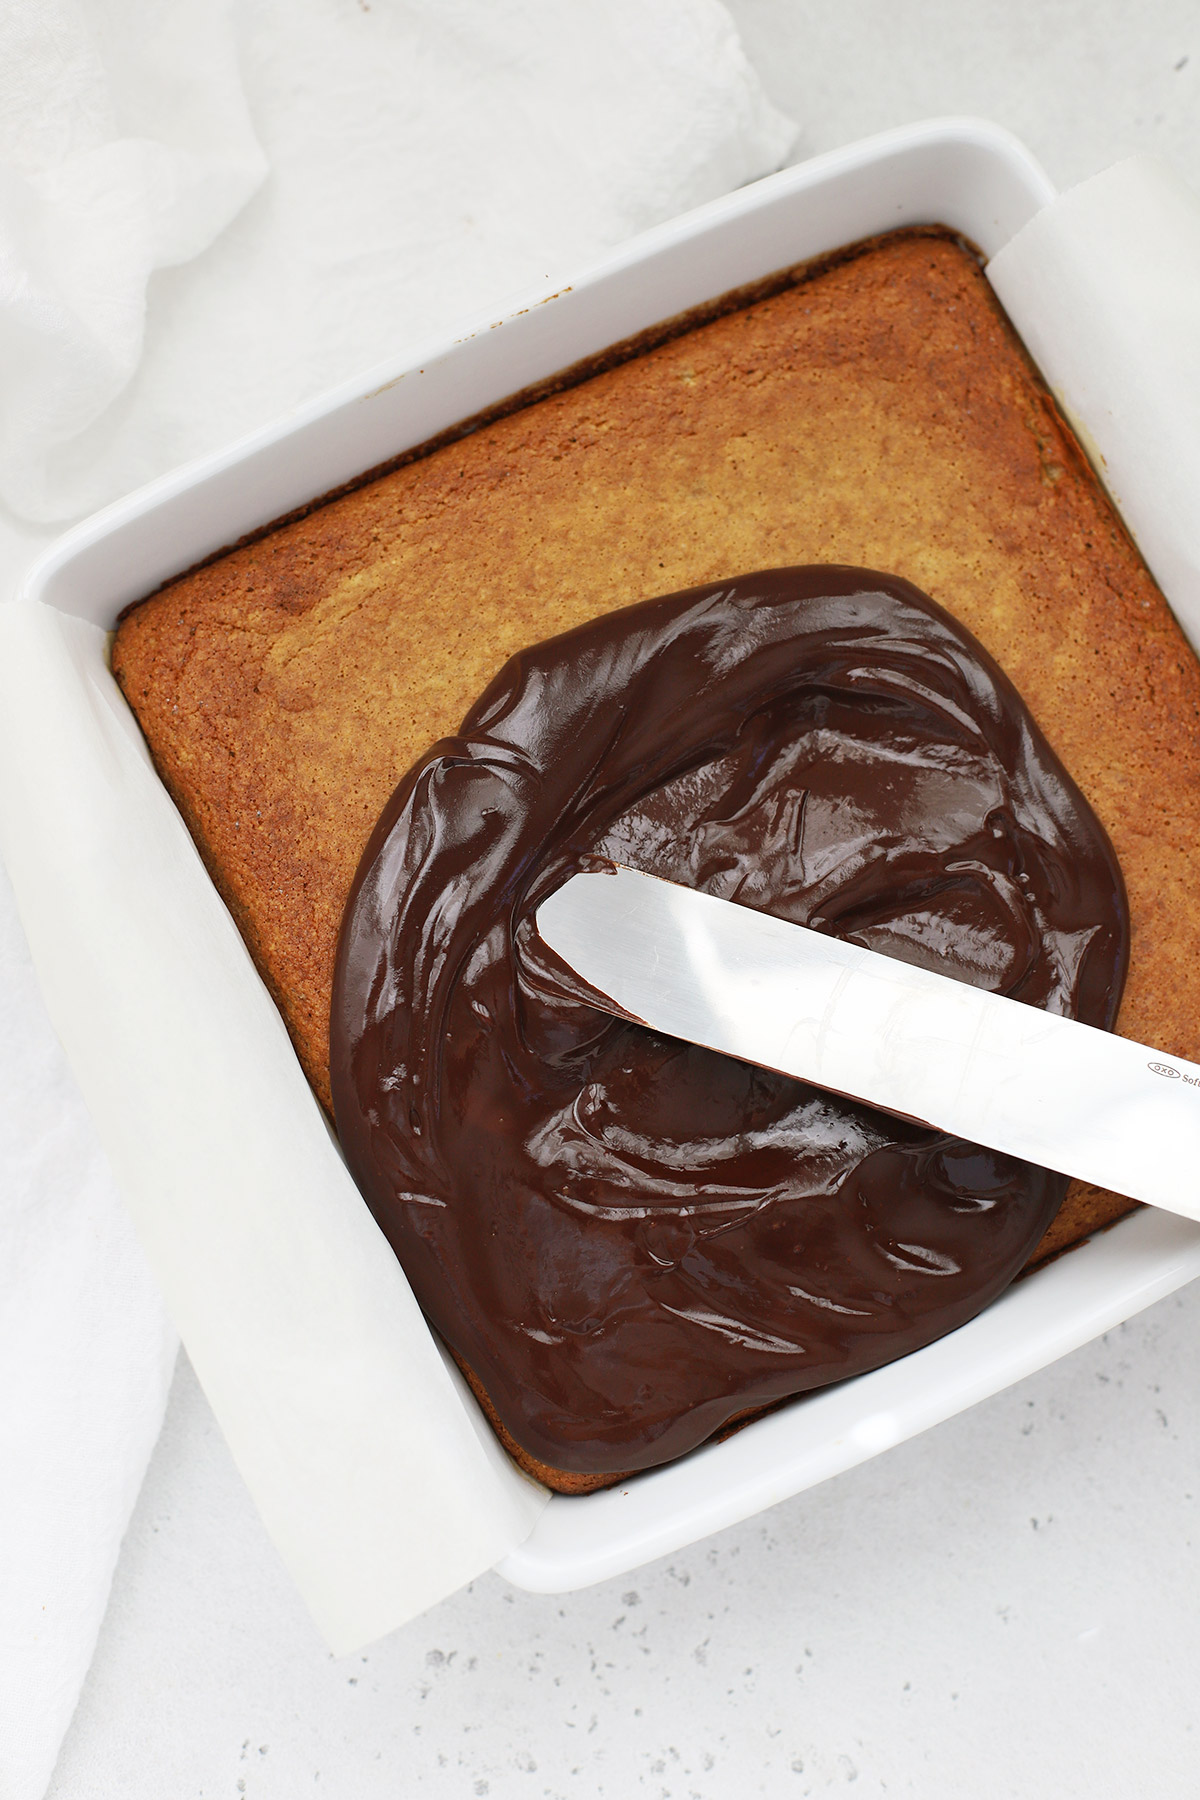 overhead view of an offset spatula spreading chocolate ganache on an almond flour banana cake